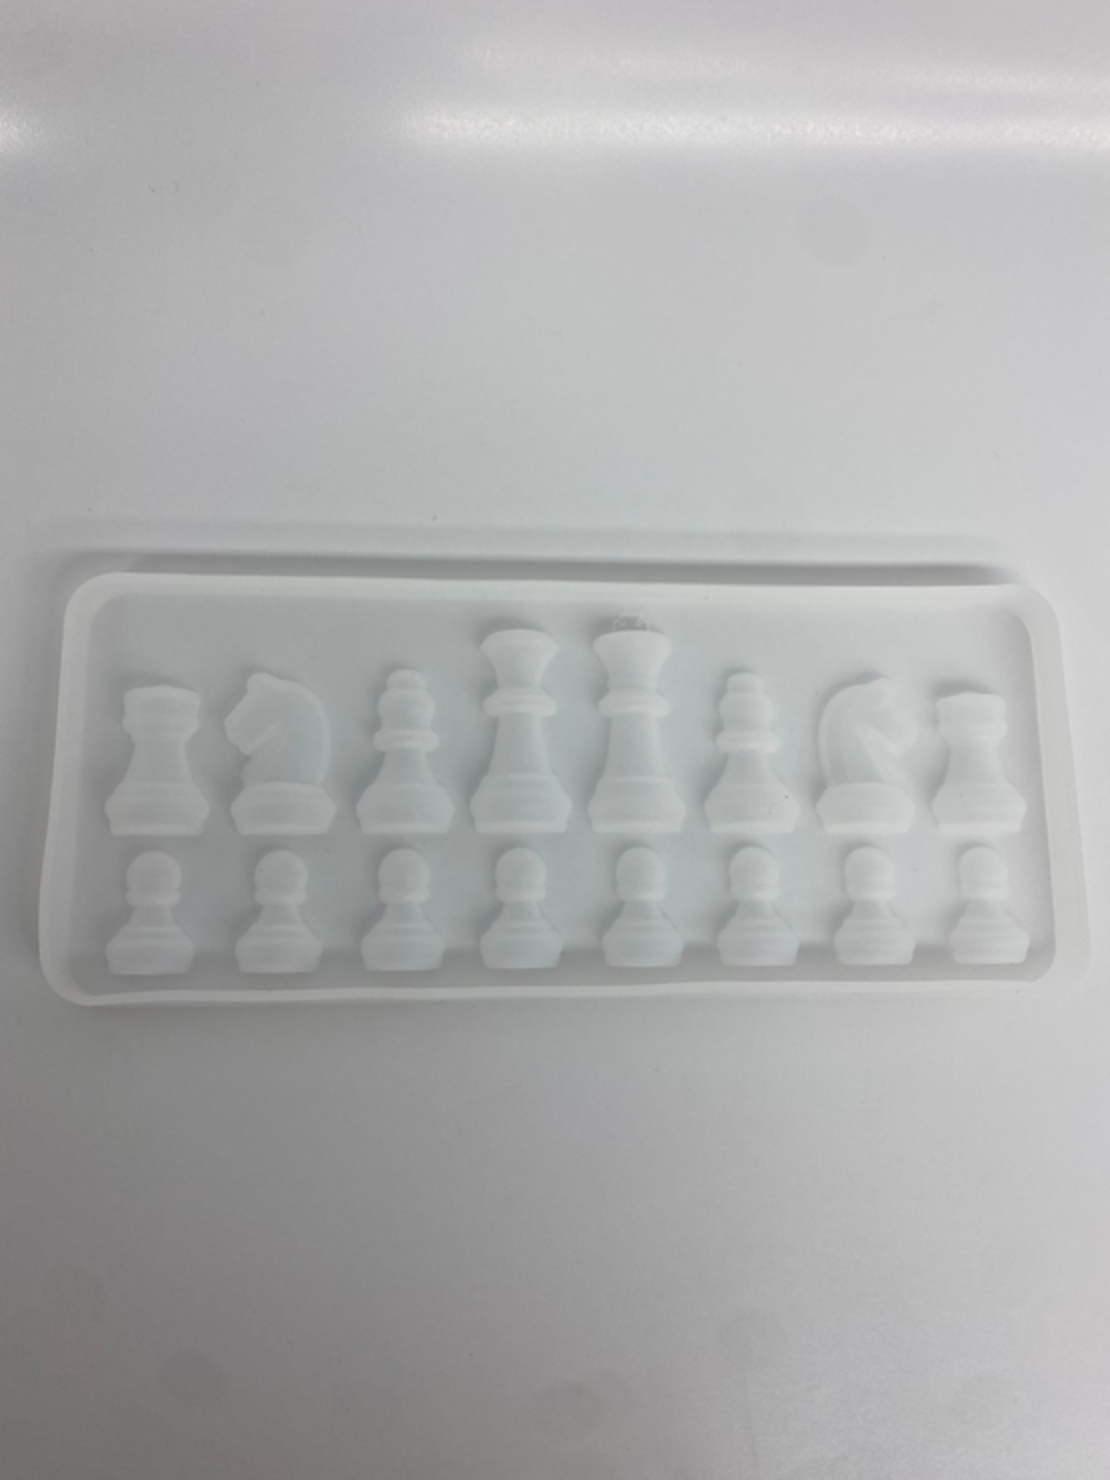 064R - תבנית סיליקון כלי שחמט